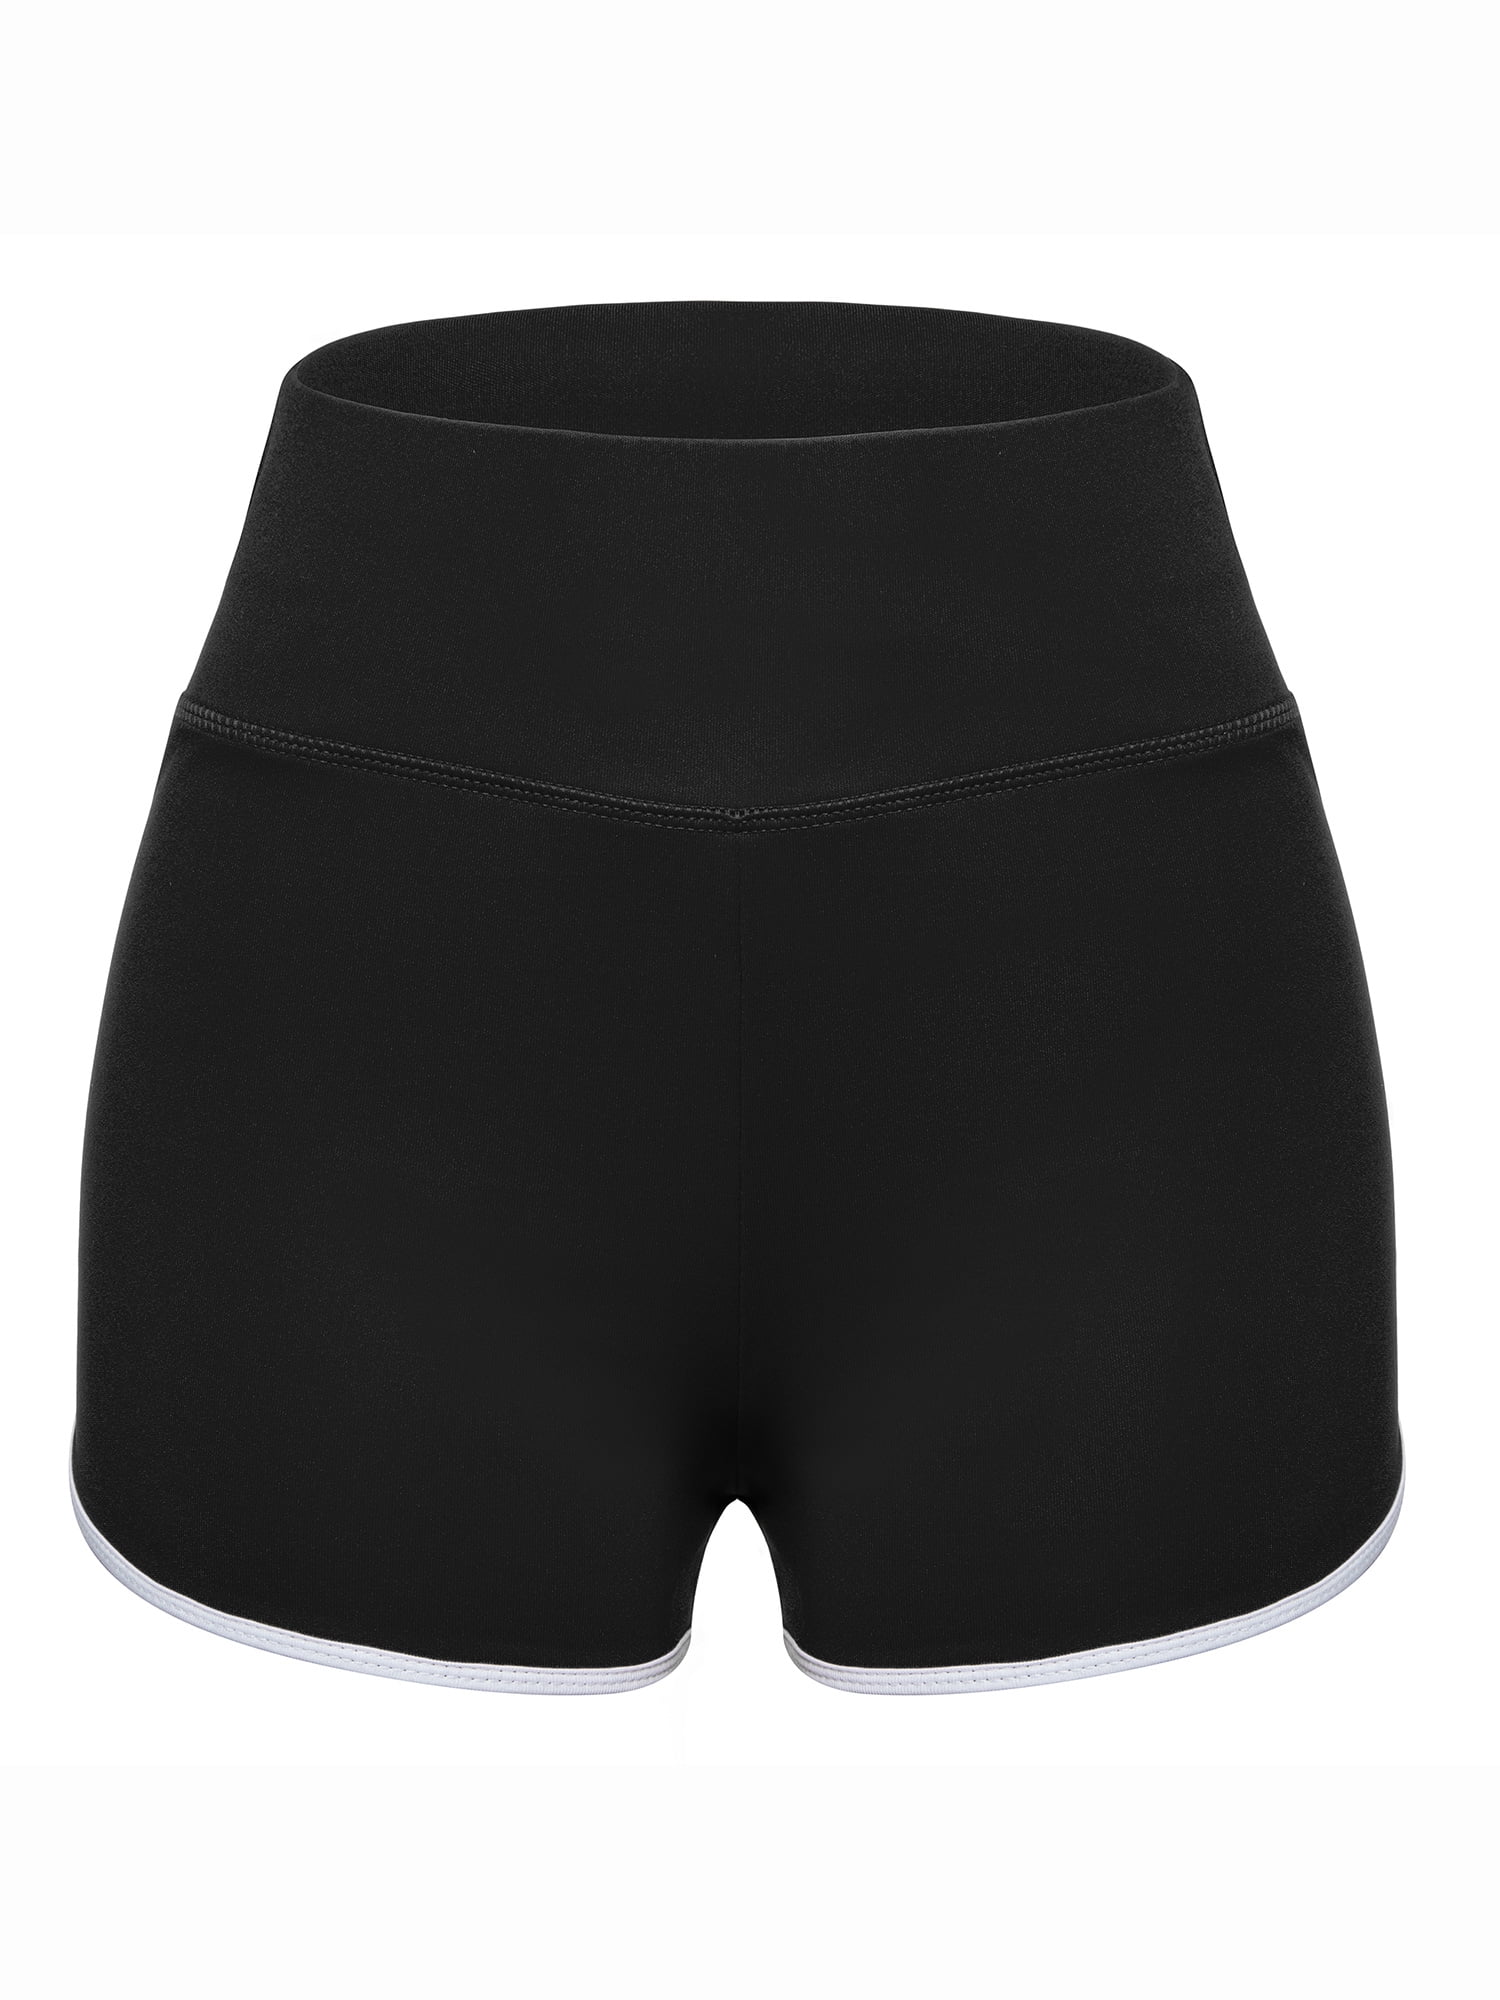 Silky Activewear Shorts- Adult - Black / AXS